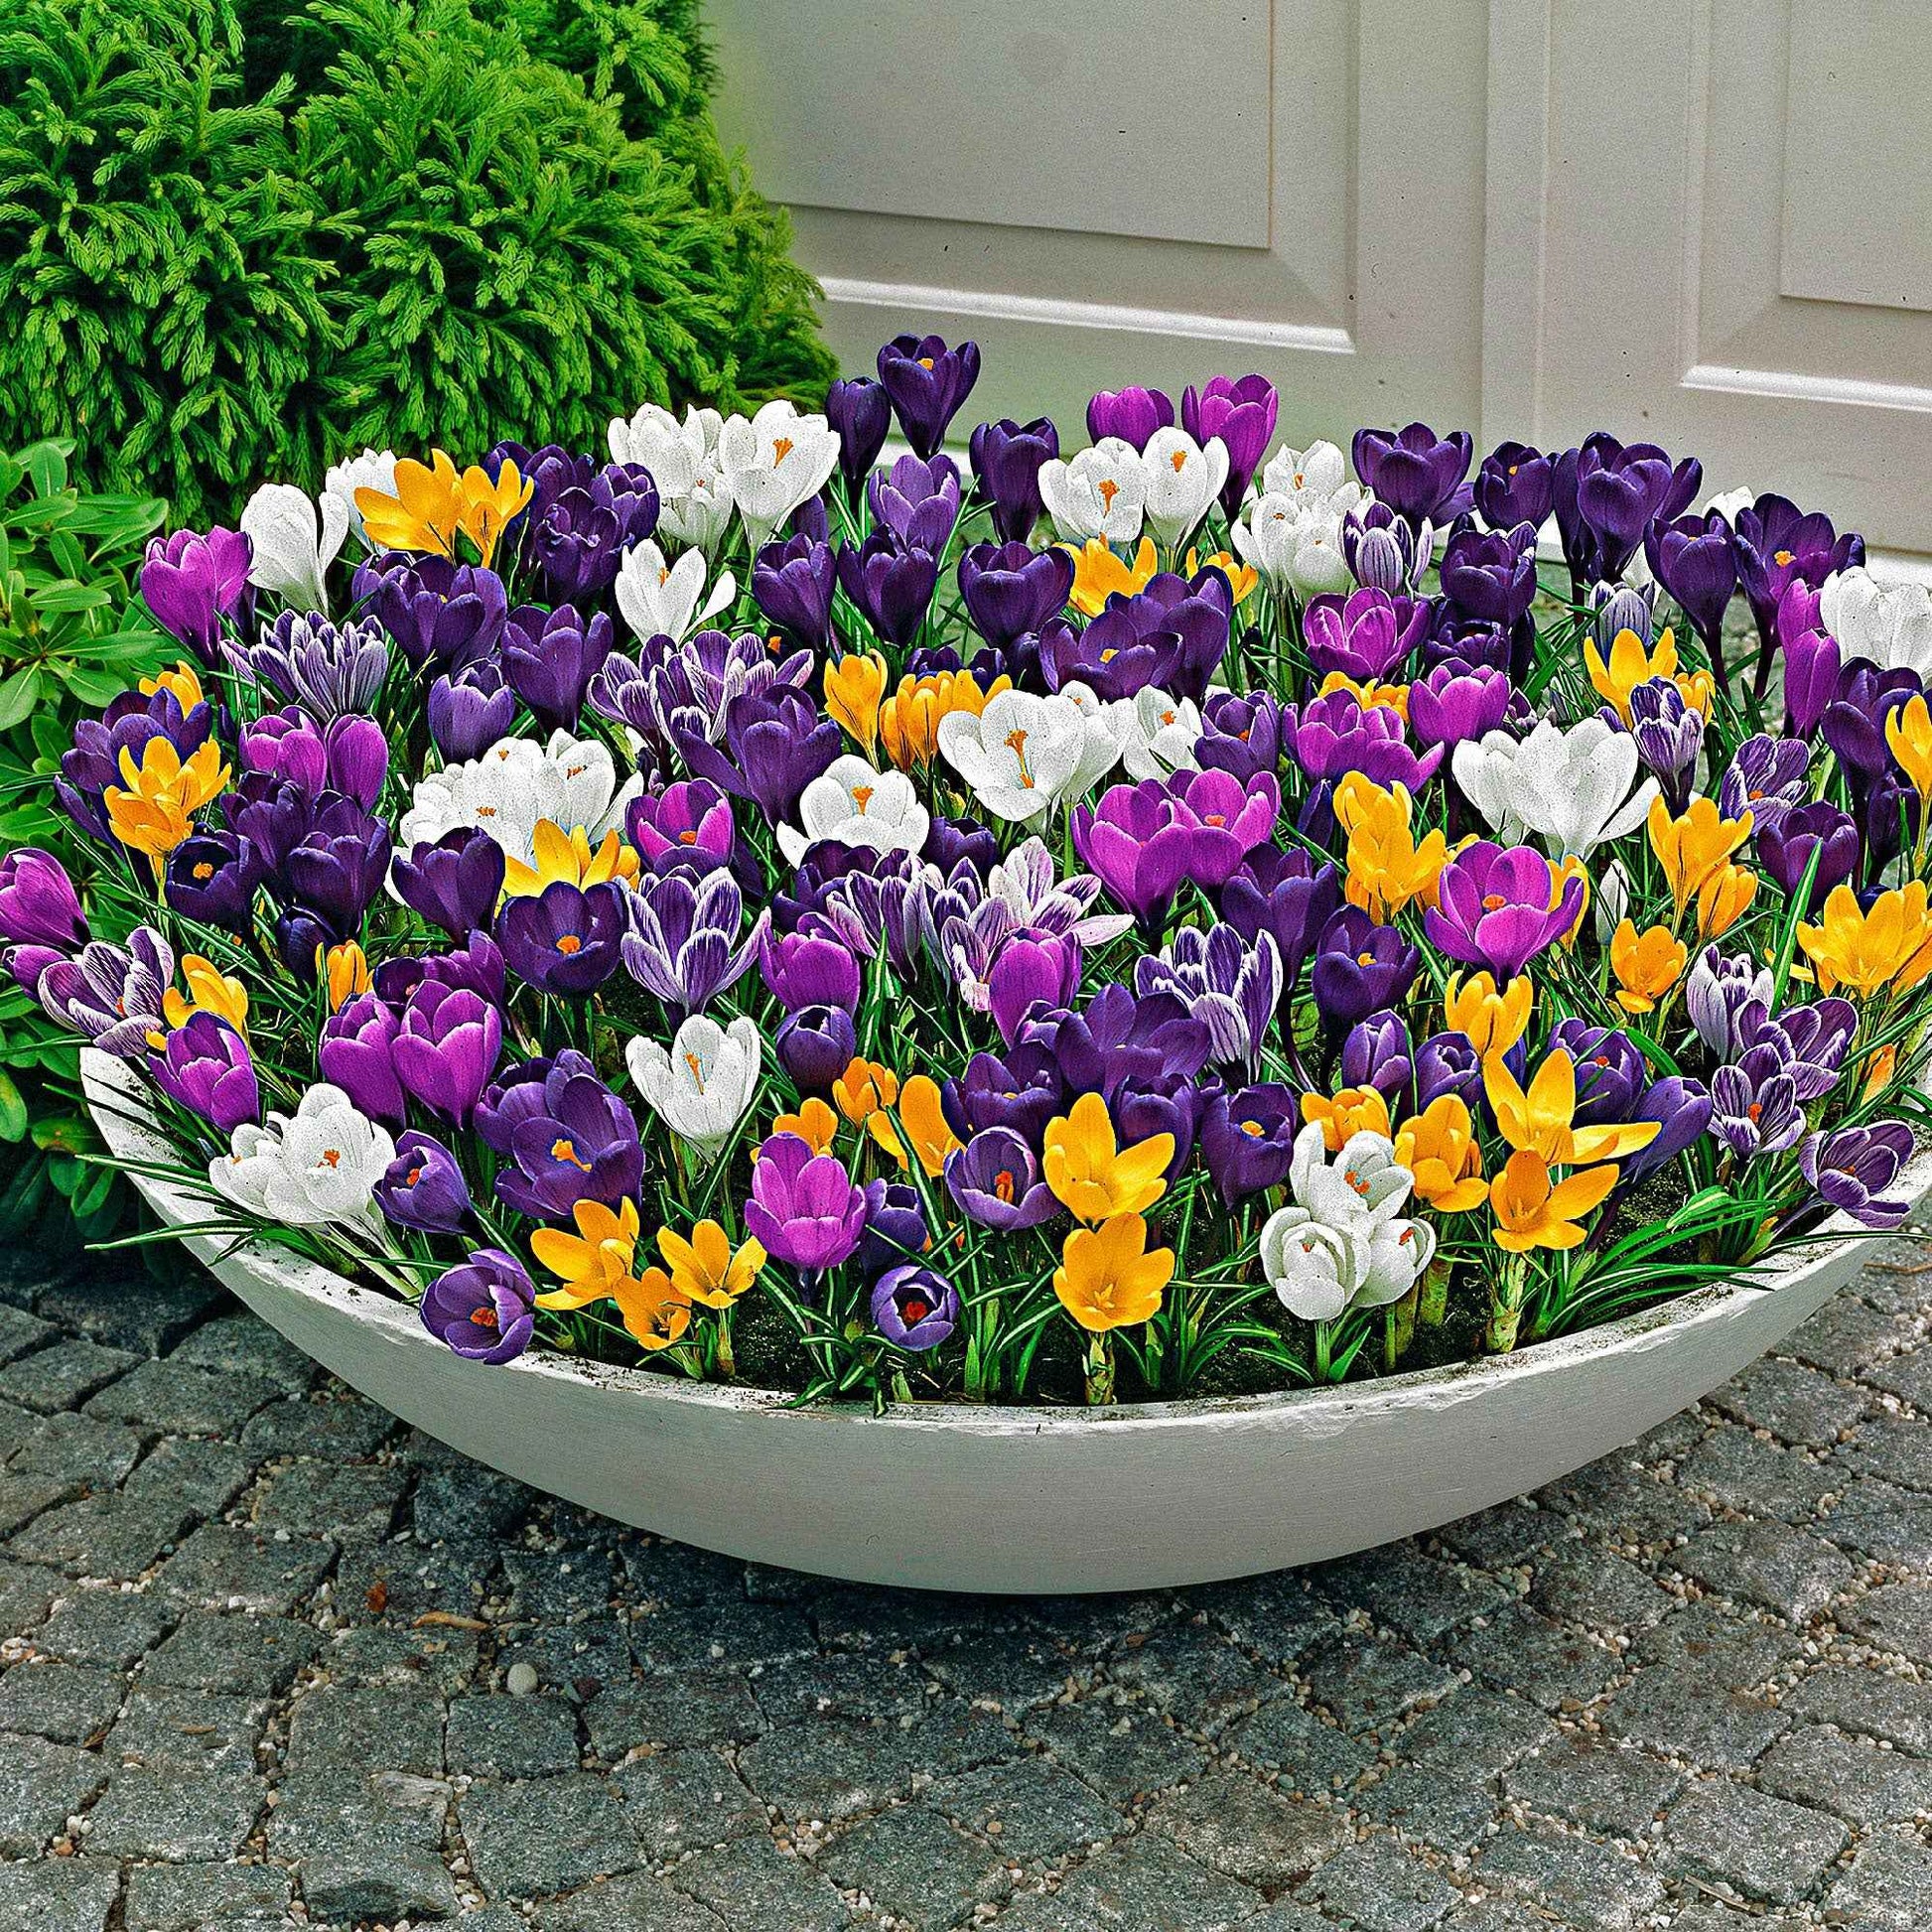 250x Grootbloemige krokus - Mix More Flowers More Flowers - Alle populaire bloembollen